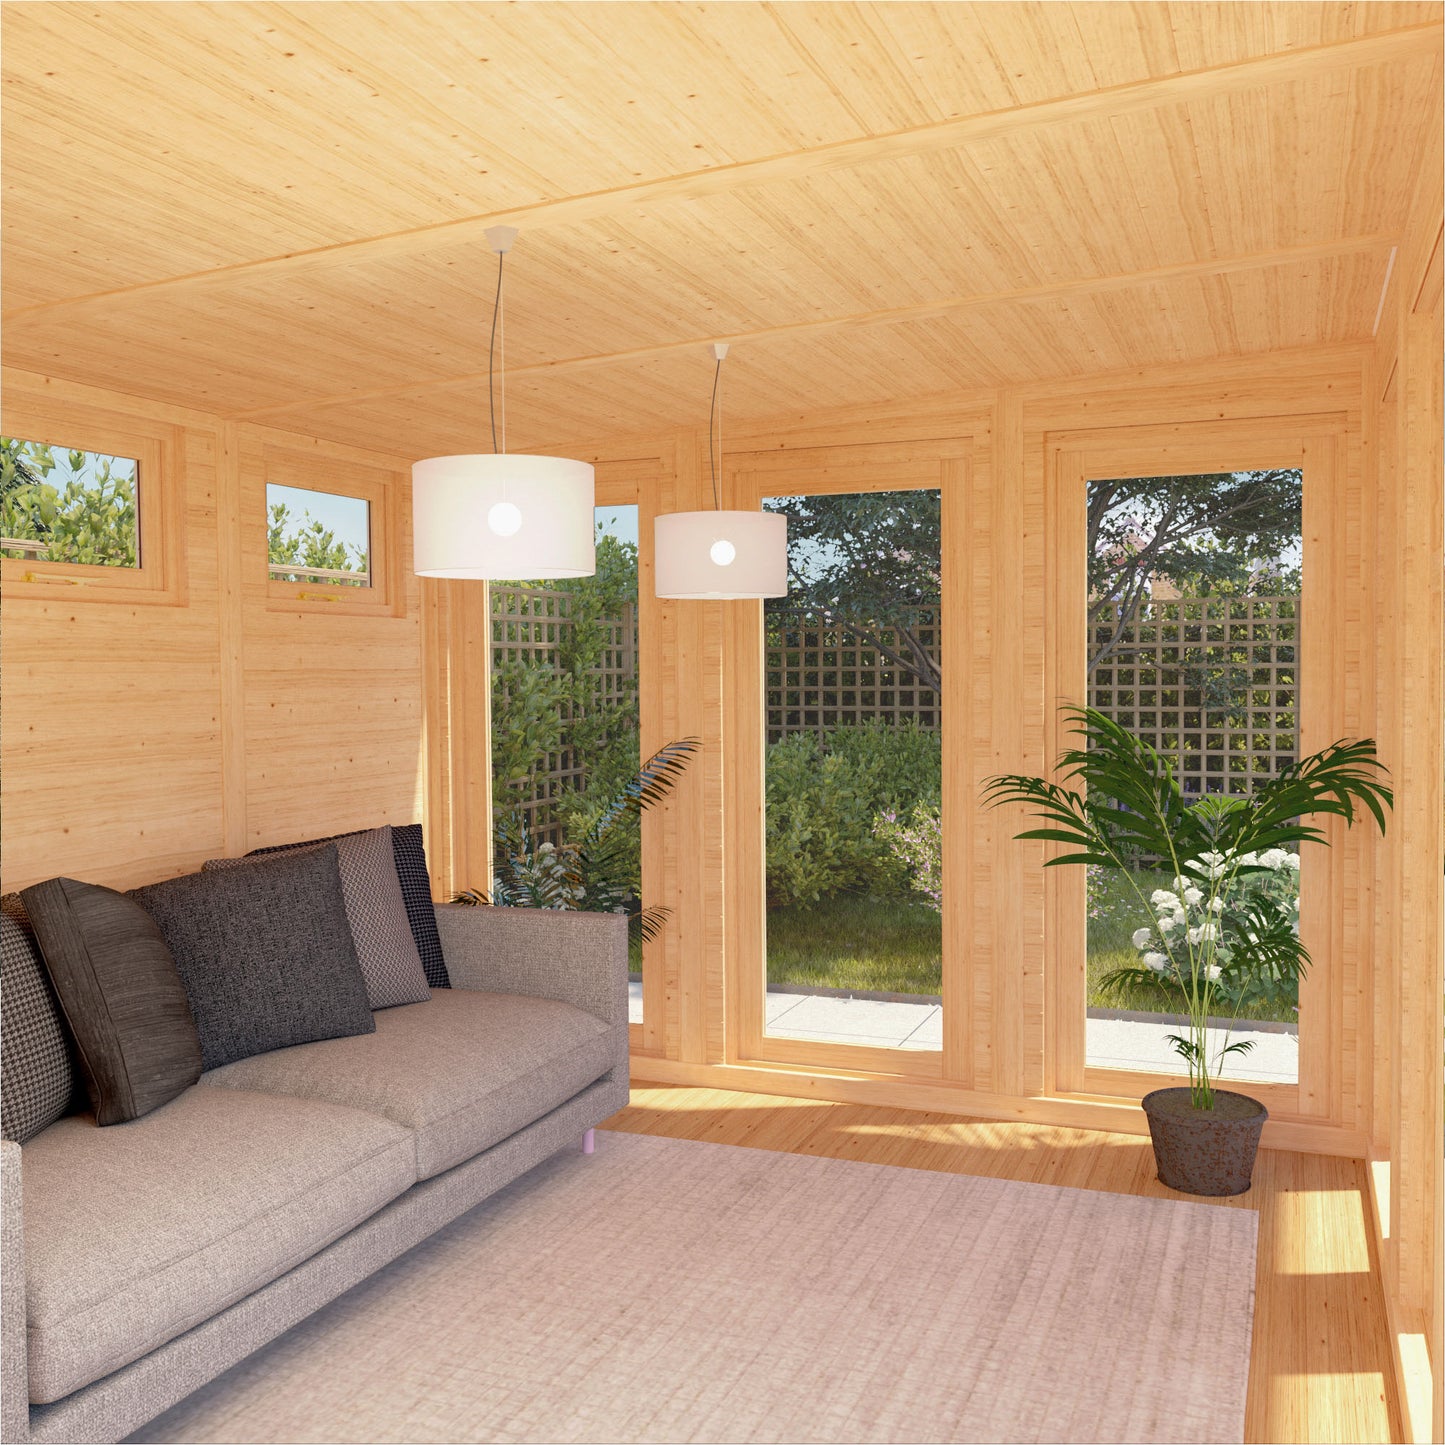 The Harlow 6m x 4m Premium Insulated Garden Room